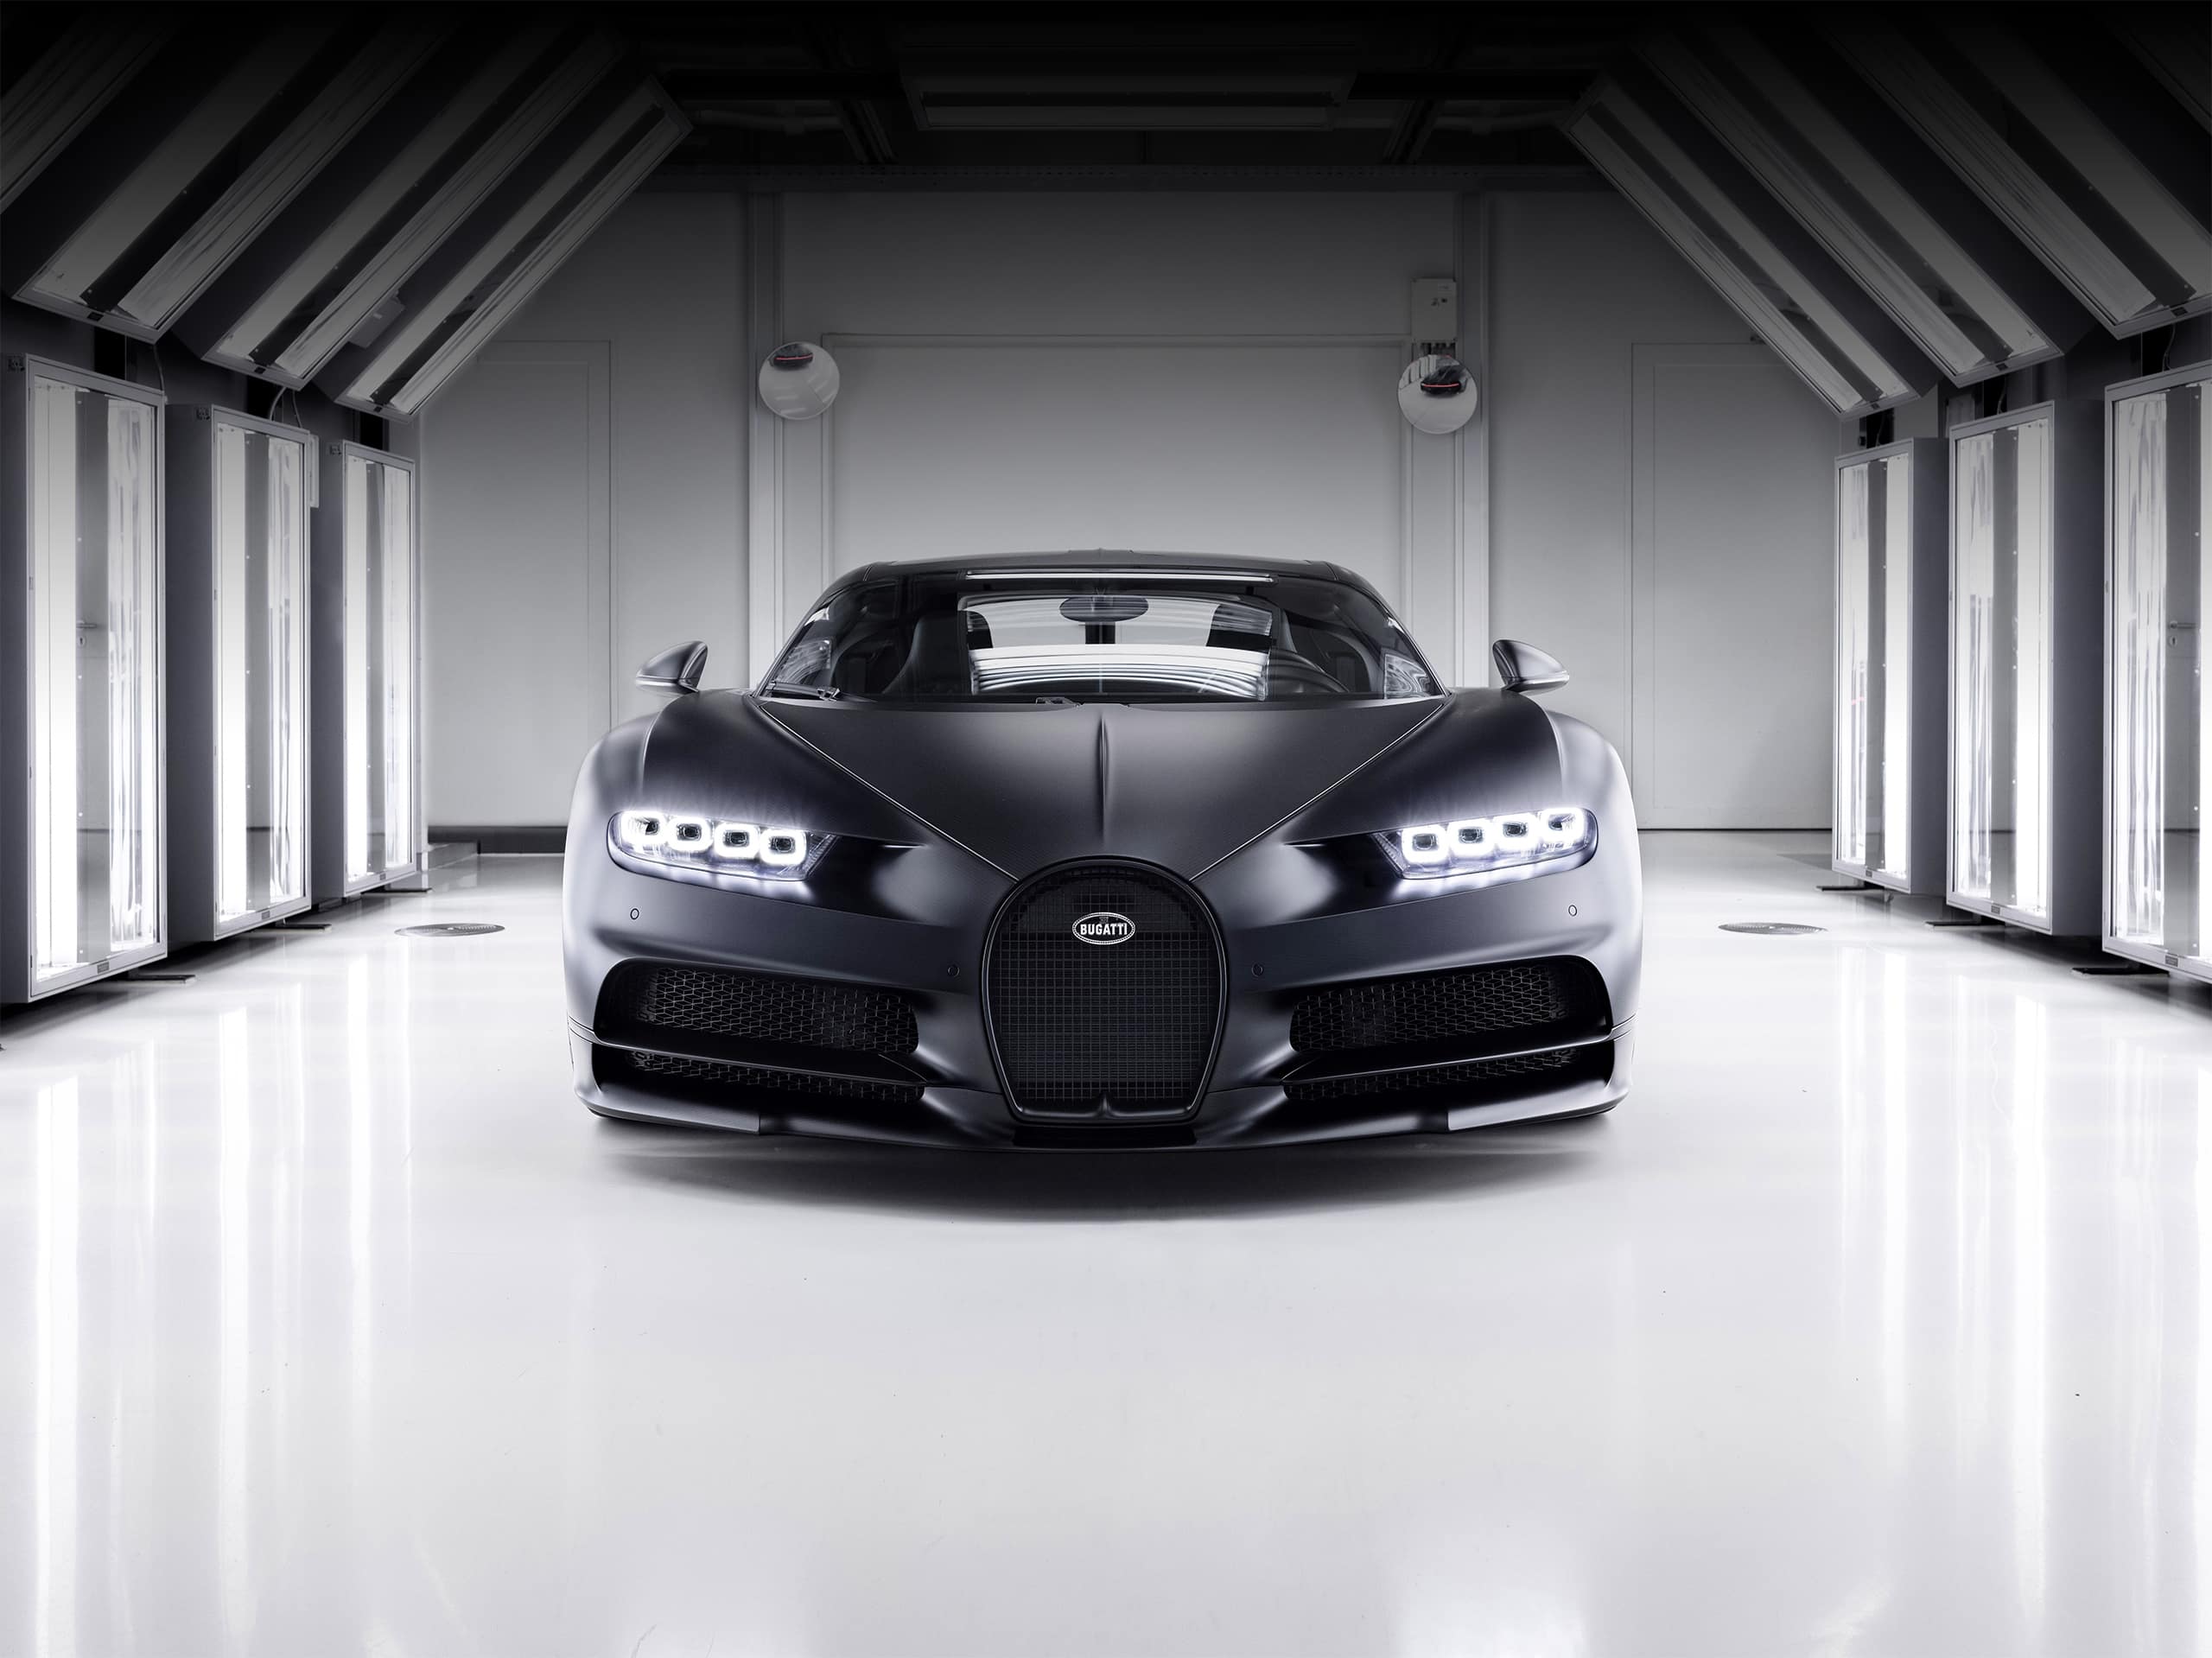 Picture of a Bugatti car